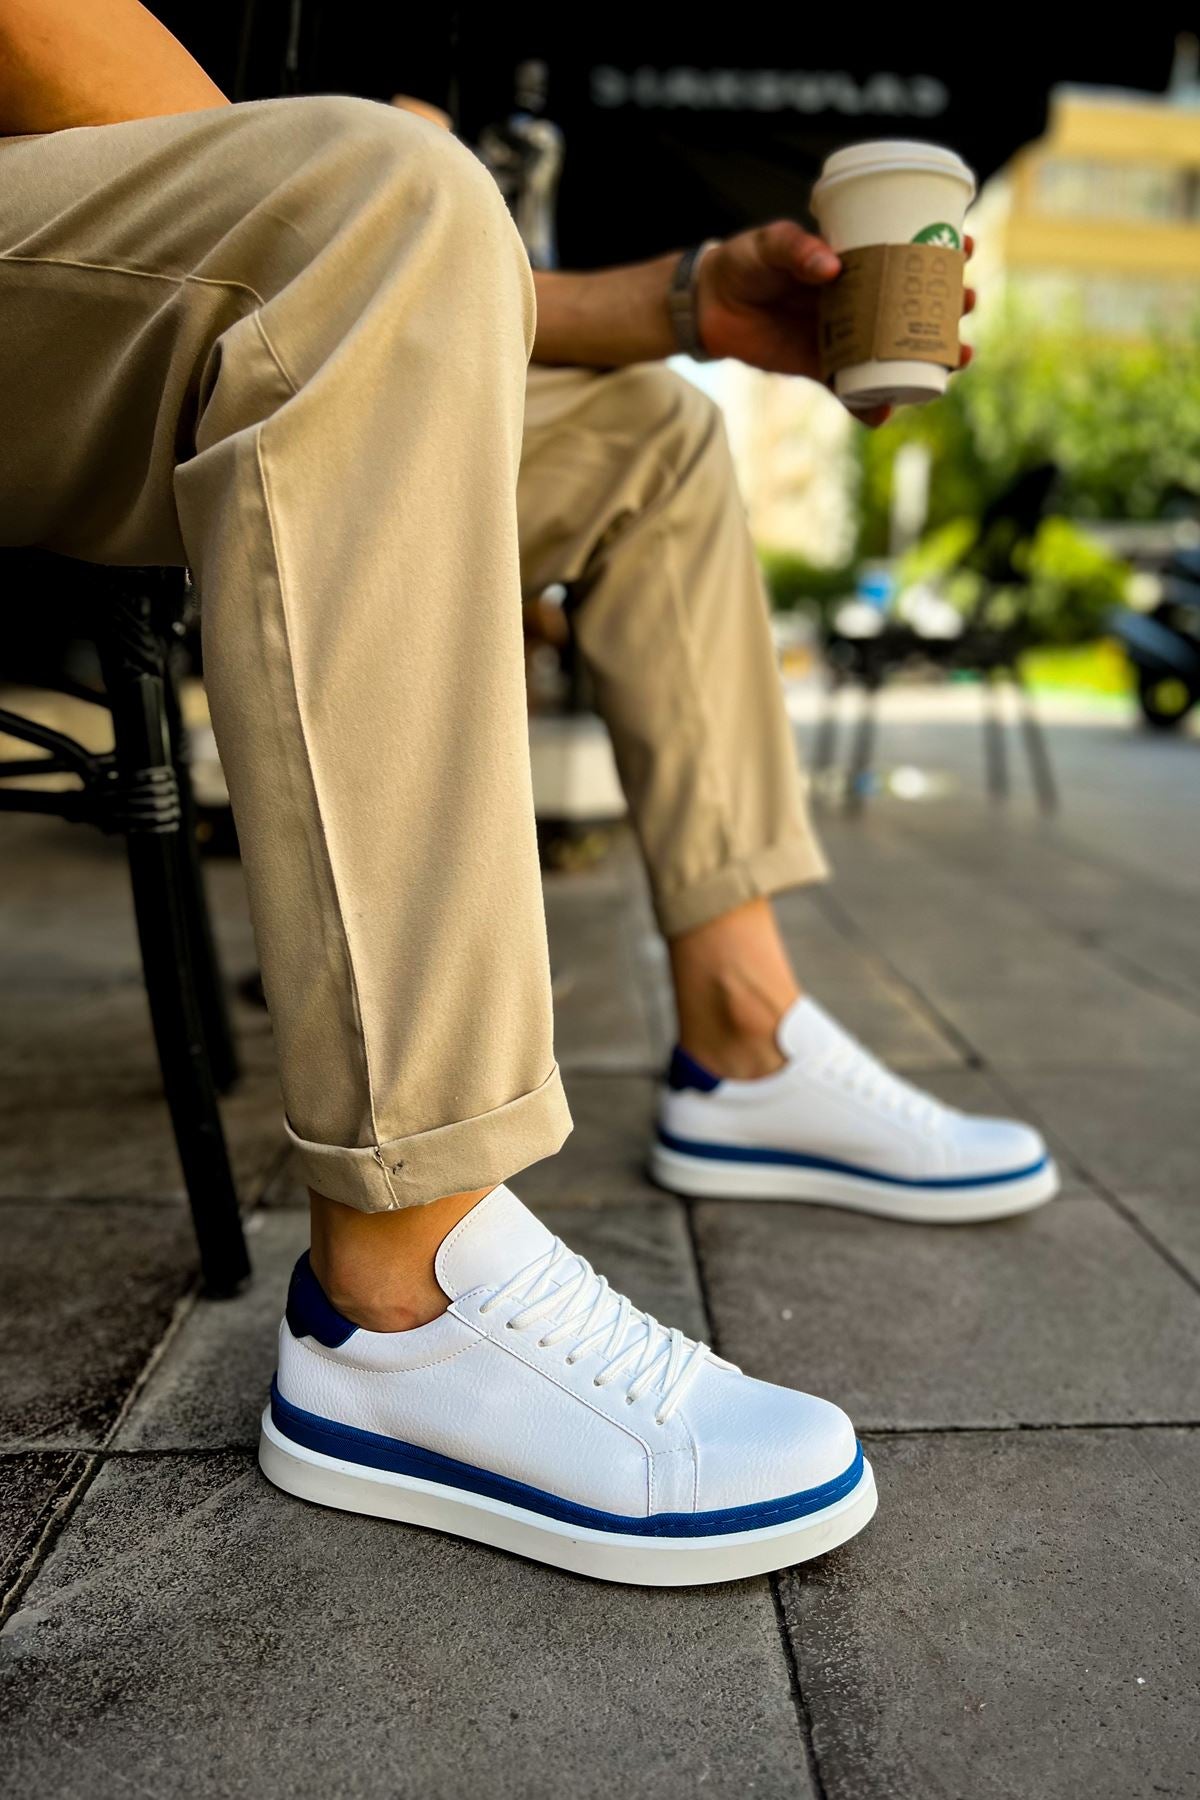 CH979 Santoni GBT Sport Men's Sneakers Shoes WHITE/BLUE - STREETMODE™